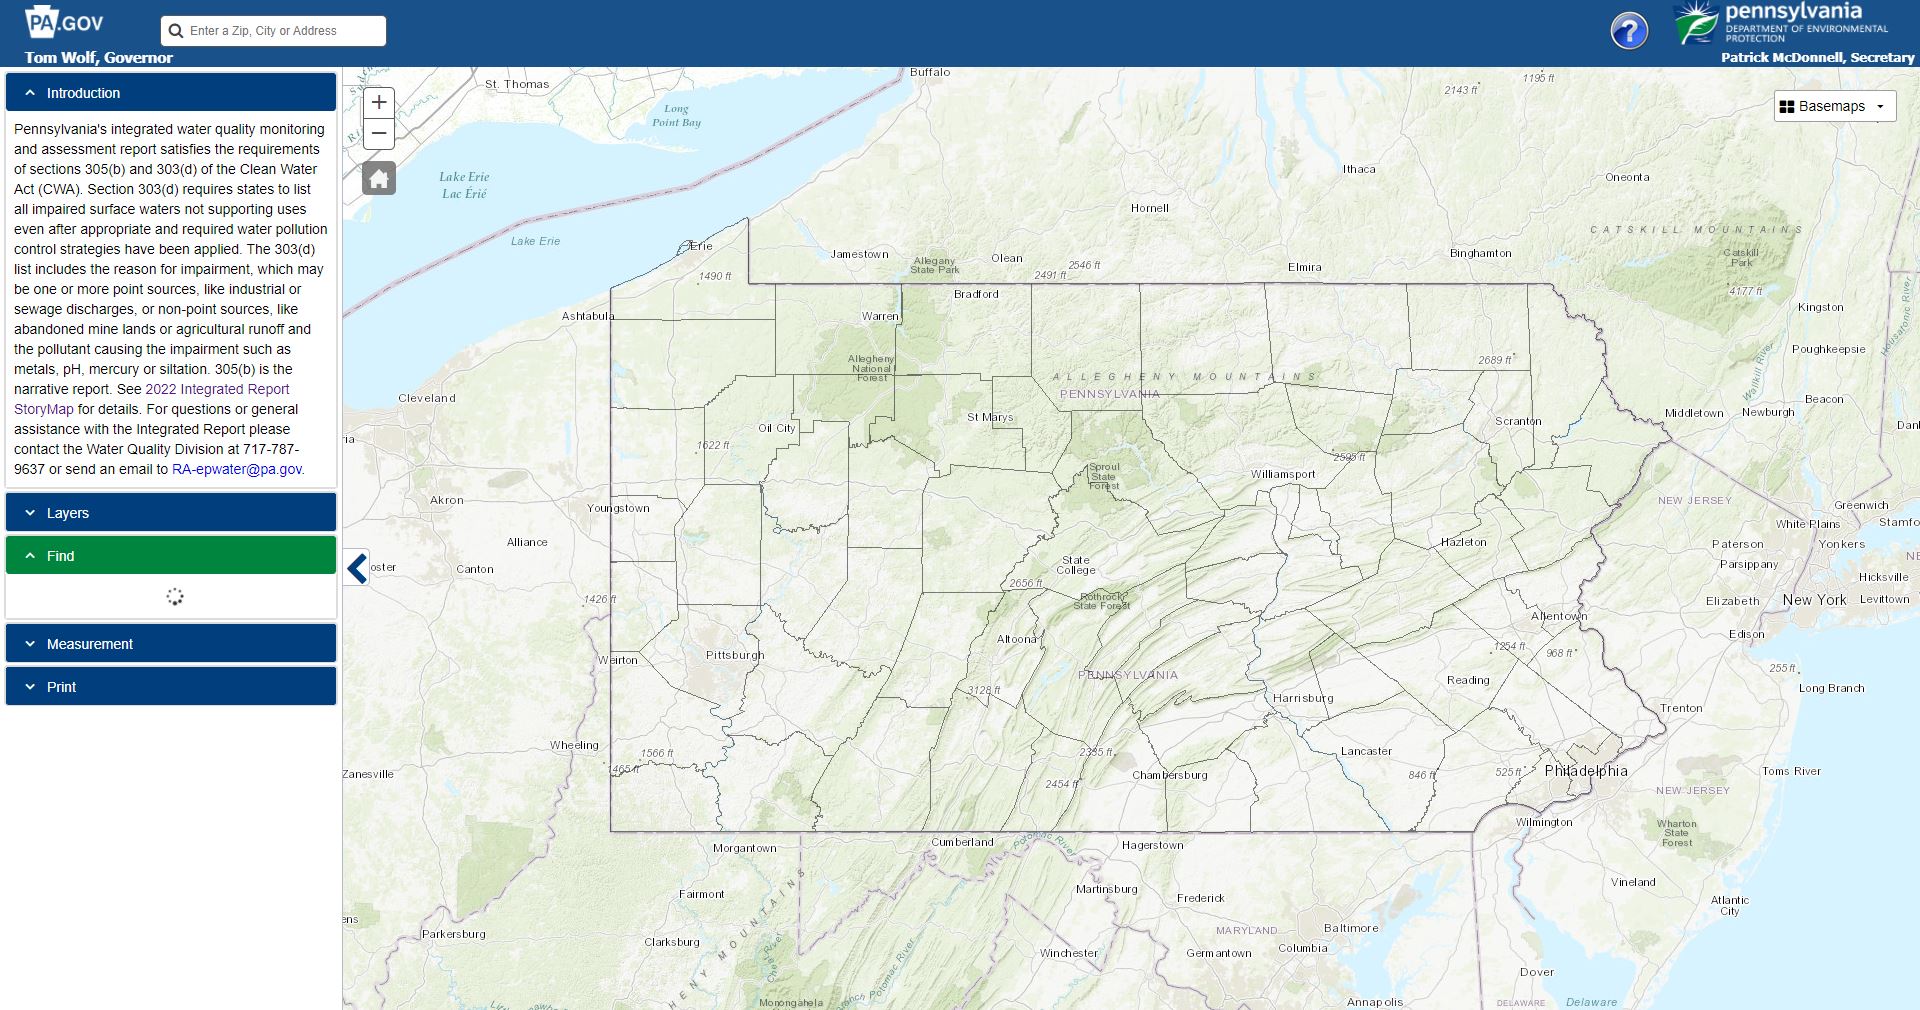 IR Viewer main screen showing map of Pennsylvania